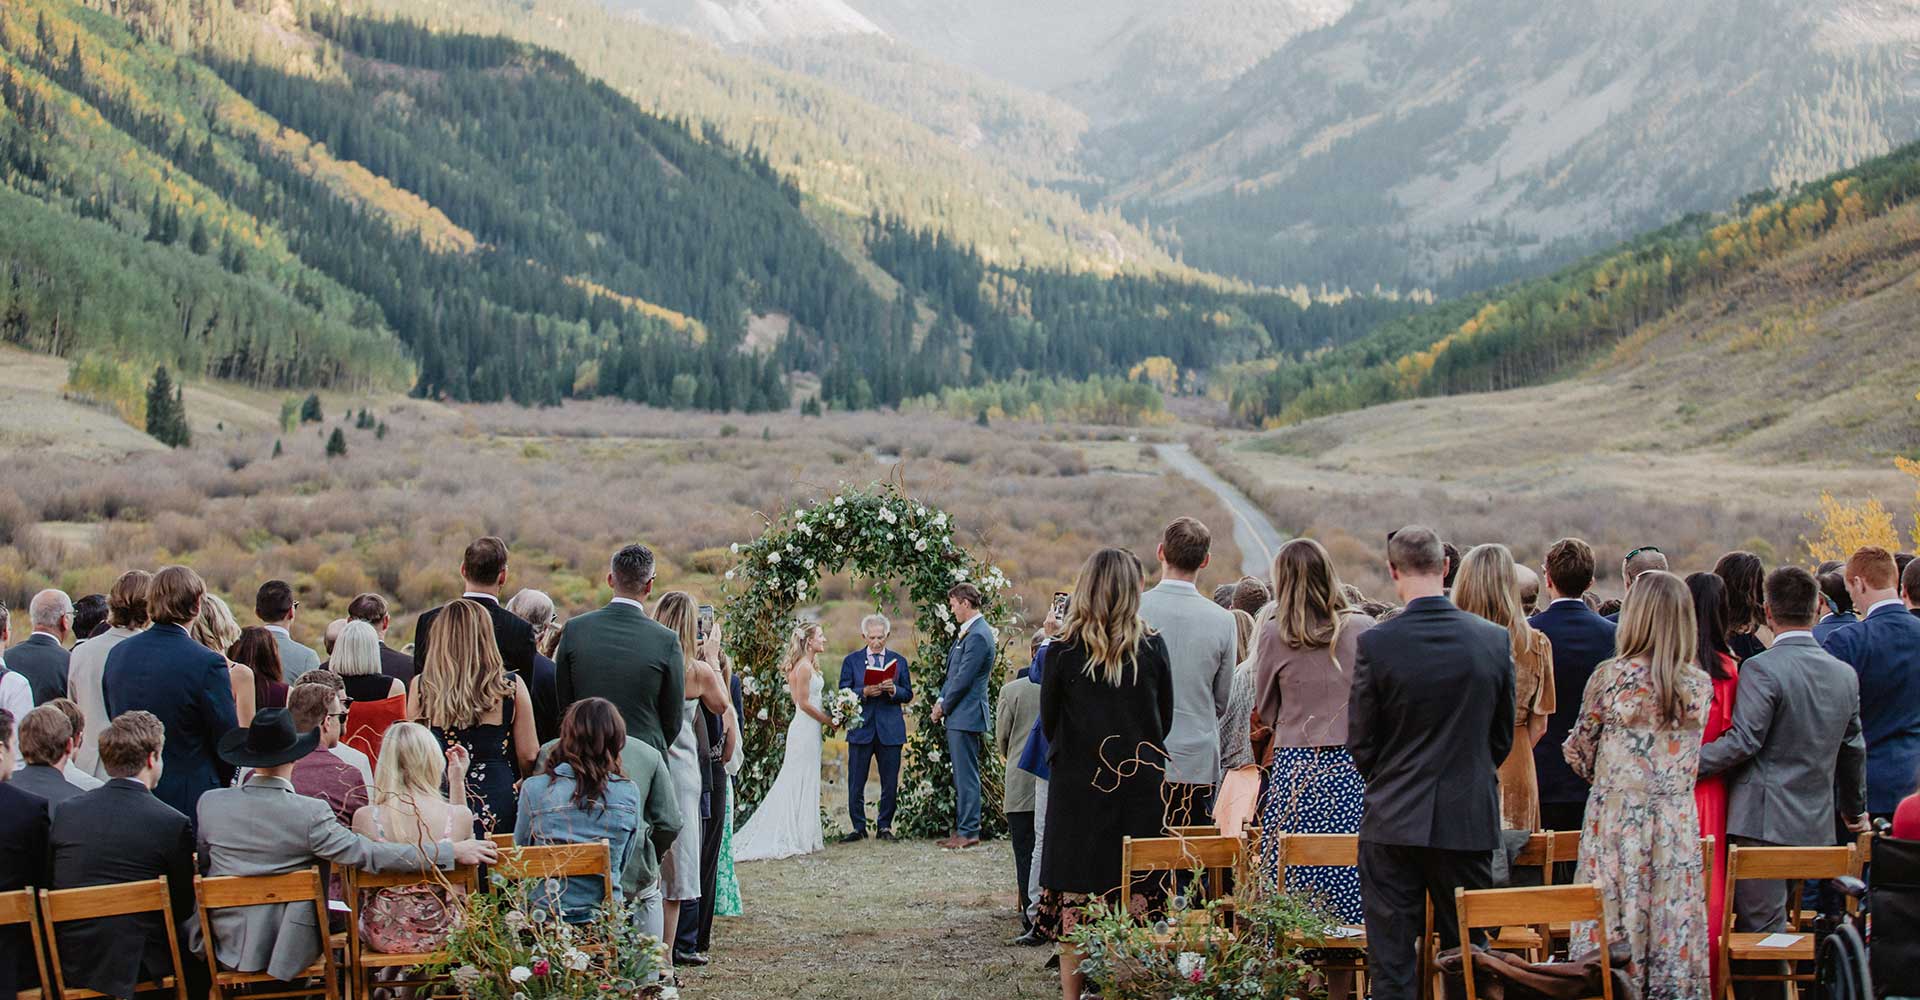 Wedding with a beautiful valley view near Aspen, Colorado